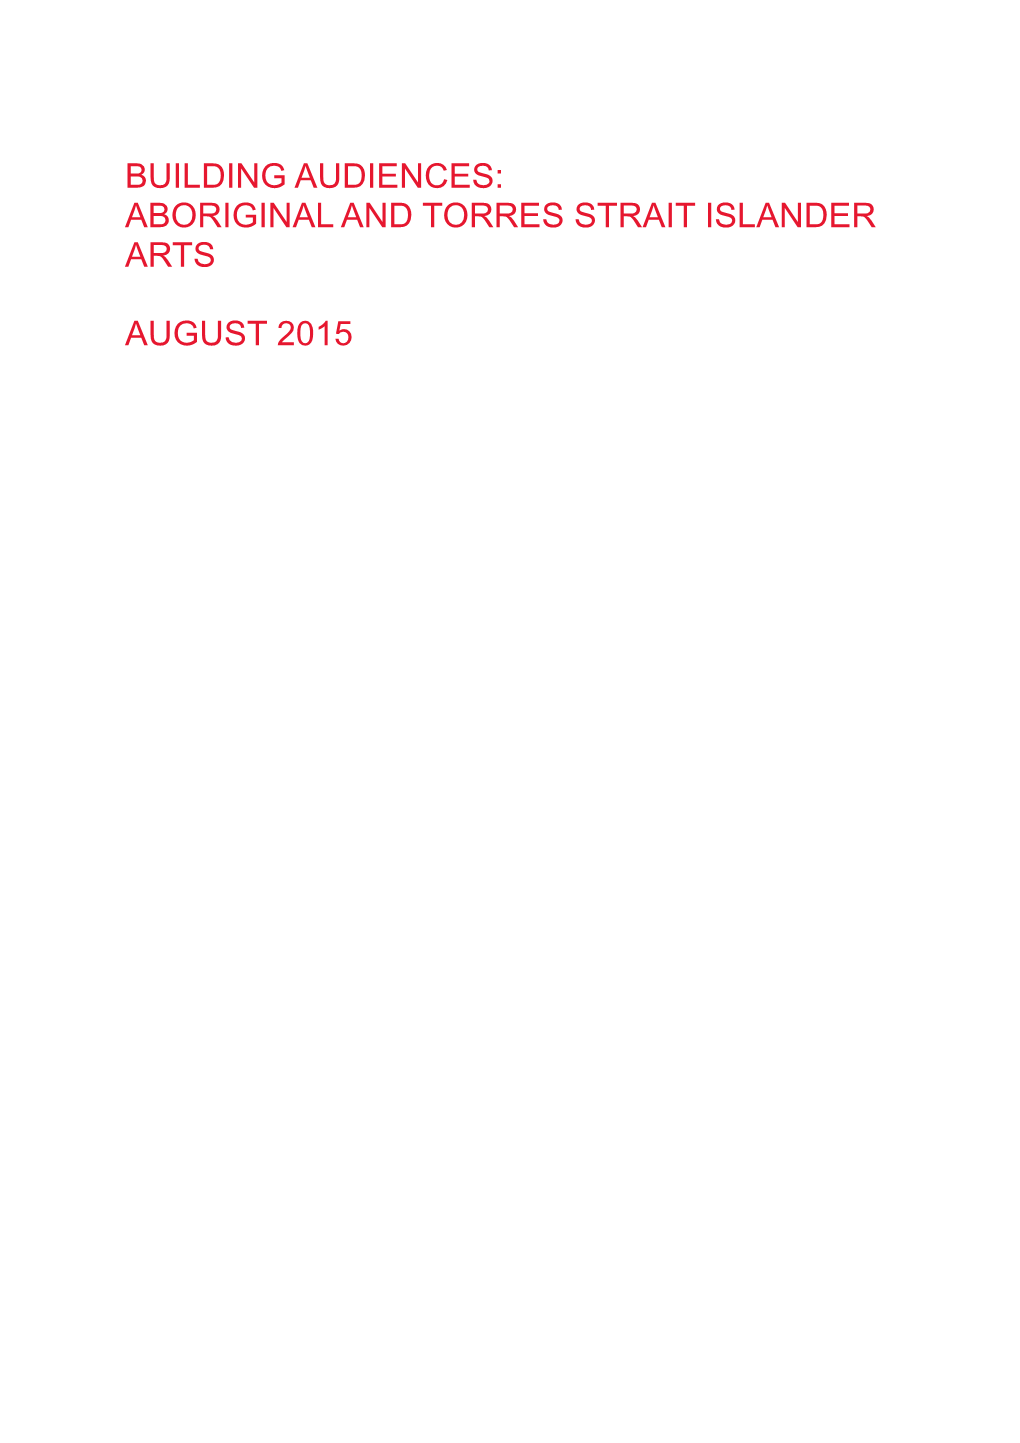 Building Audiences: Aboriginal and Torres Strait Islander Arts August 2015